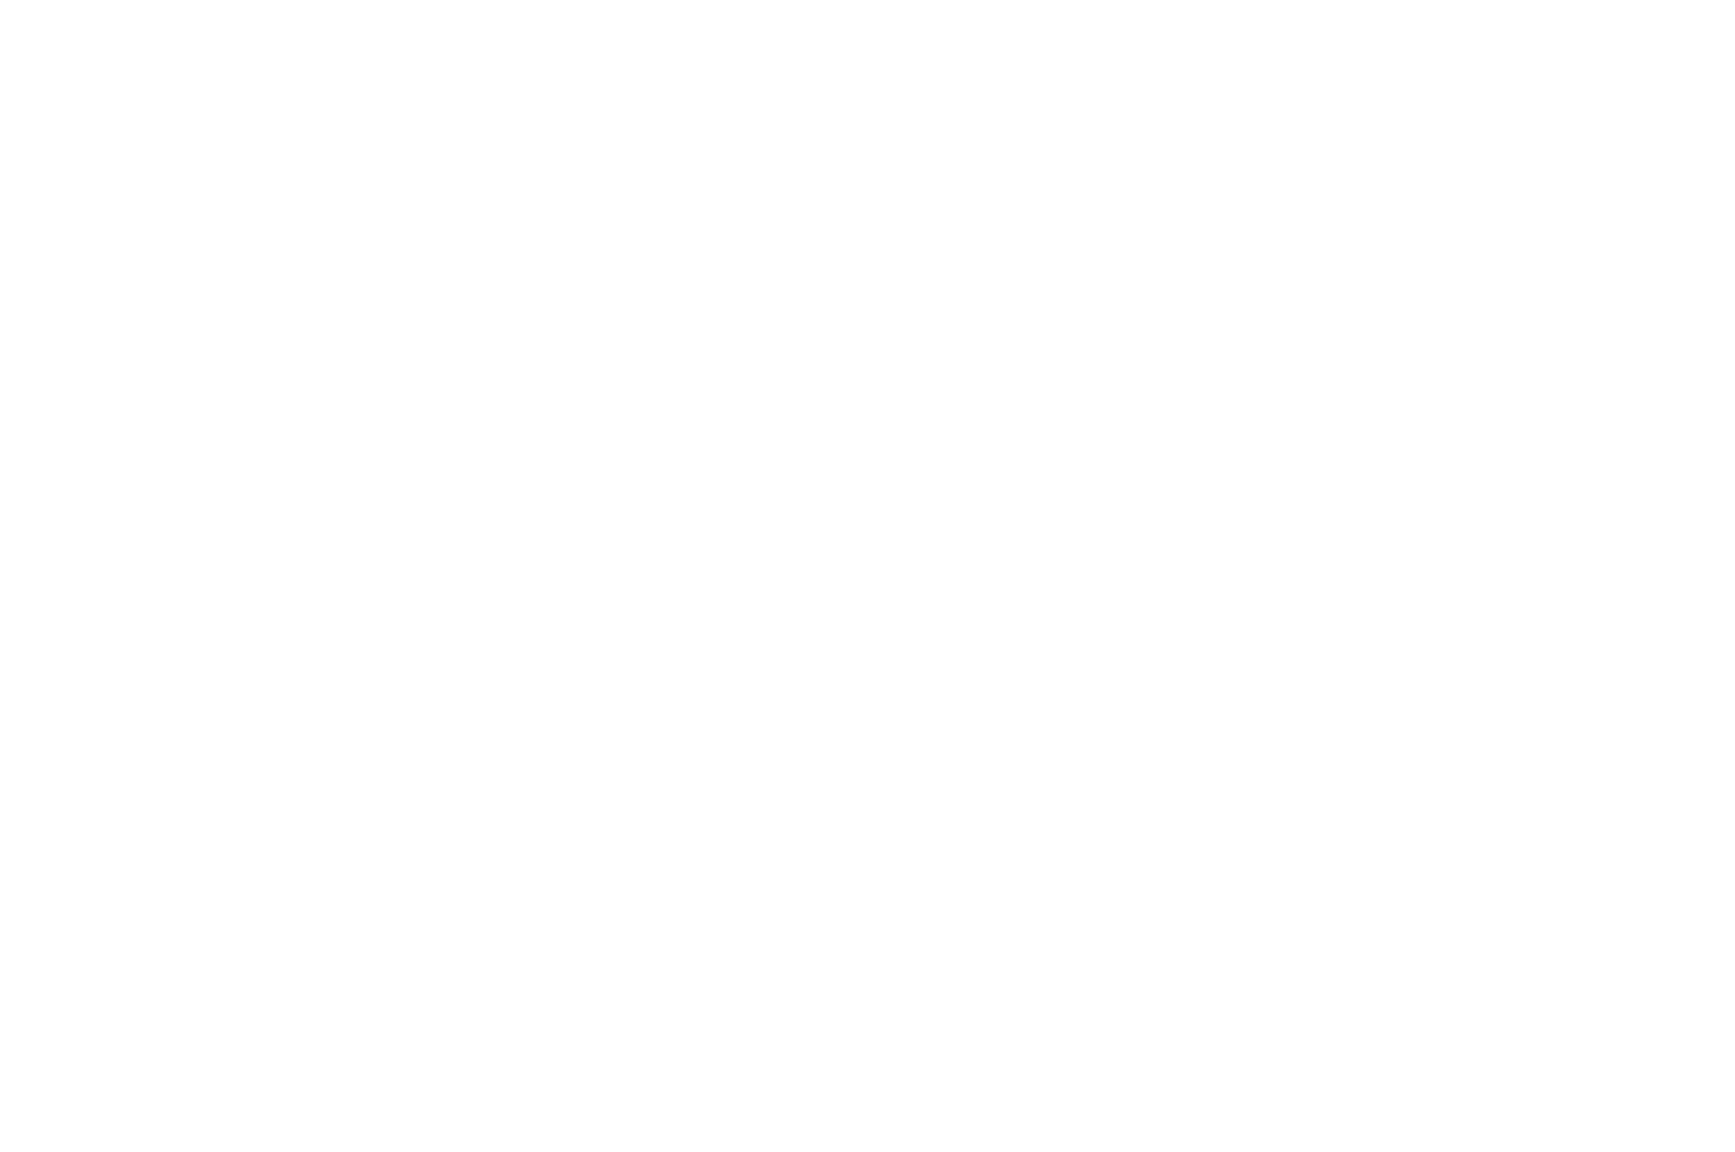 OFFICIAL SELECTION - ART IN MOTION Film Festival - Best Director Short Documentary 2024